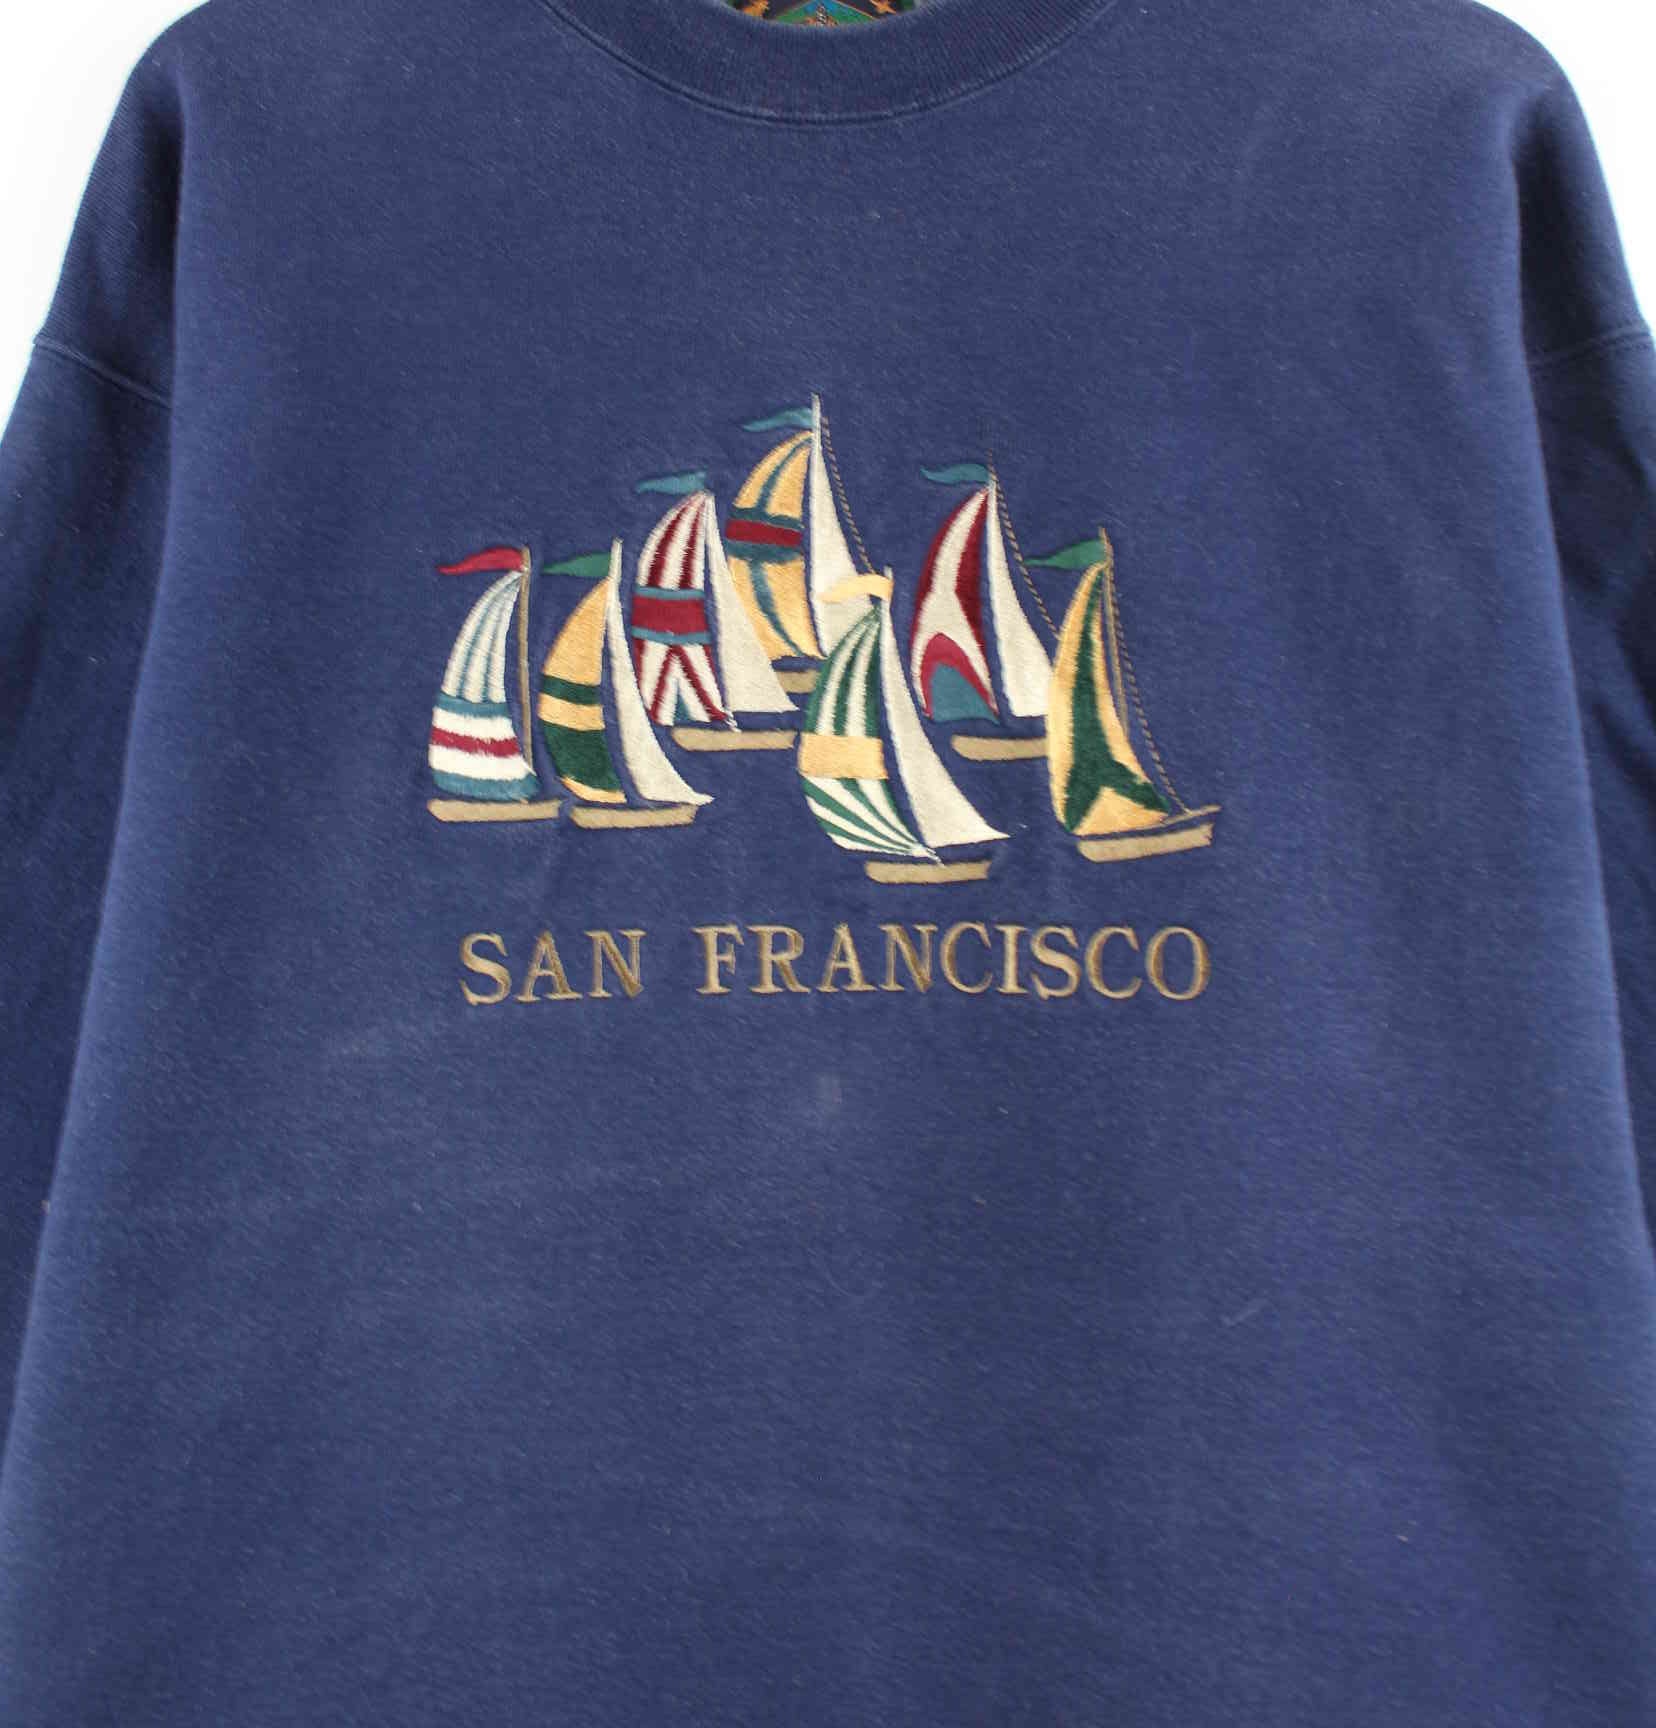 Camp David 80s Vintage Embroidered Sweater Blau L (detail image 1)